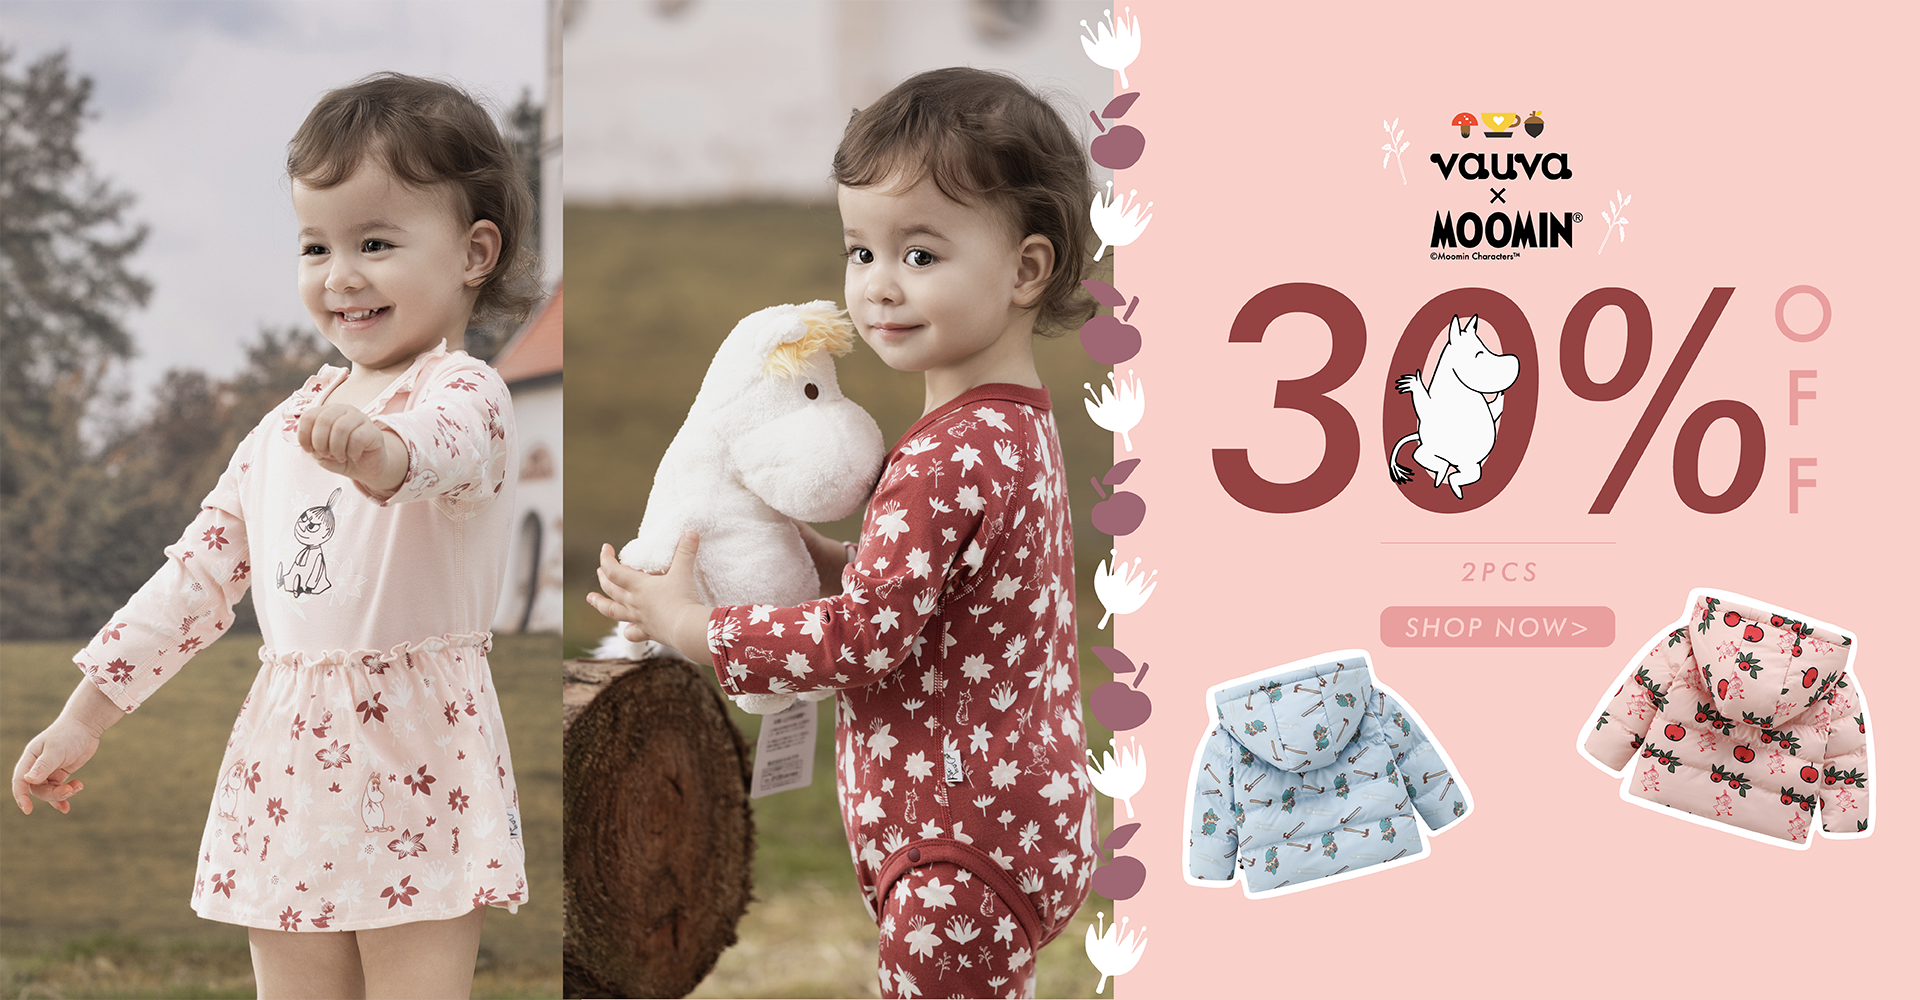 My Little Korner - CNY  Vauva X Moomin Promotion Buy 2 get 30% OFF - Desktop Image